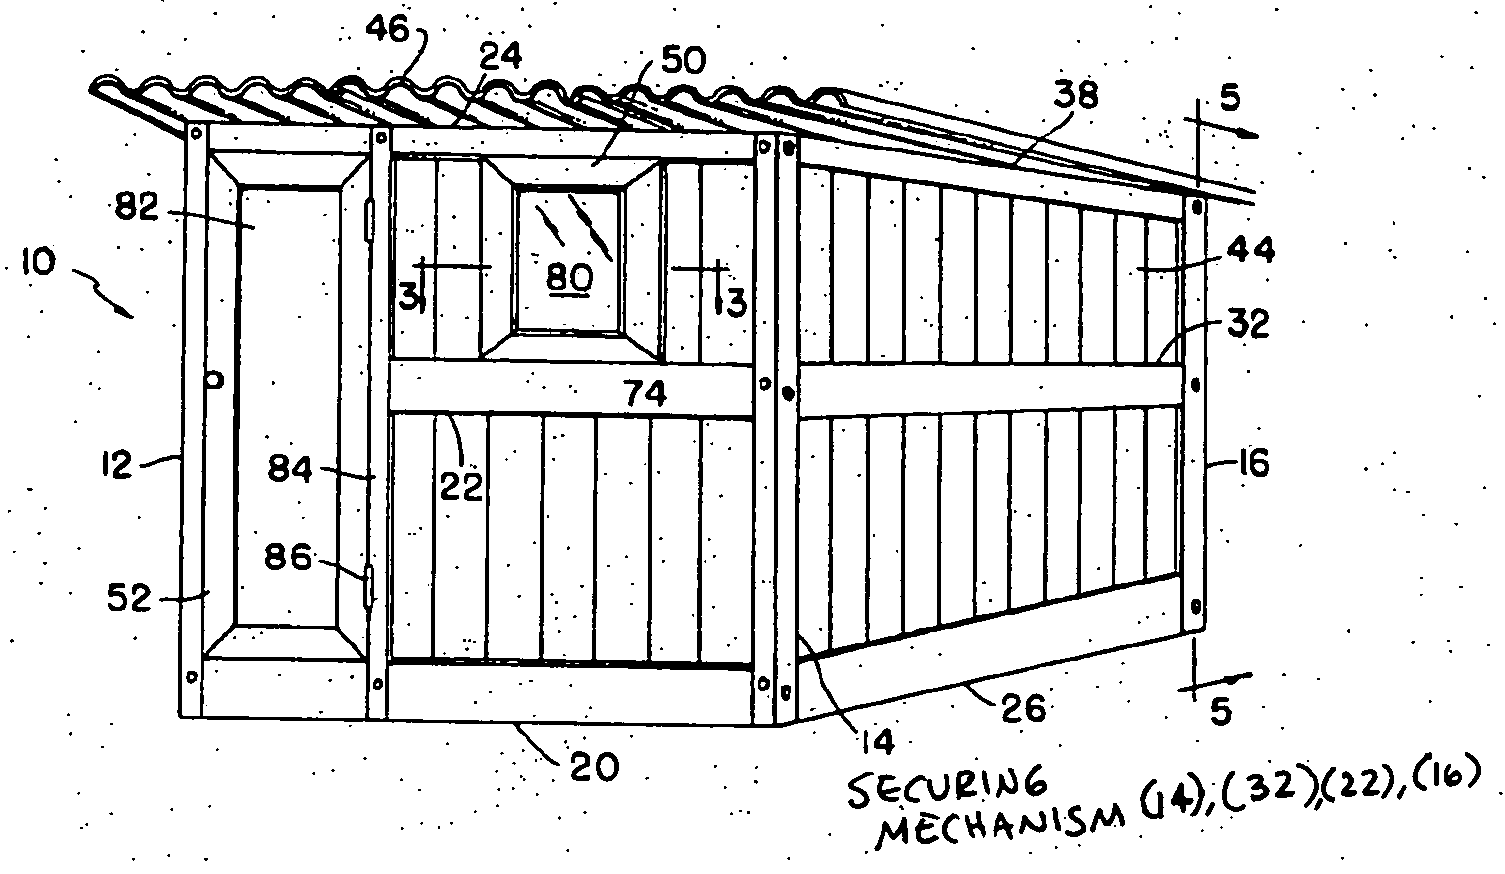 Modular sentry station